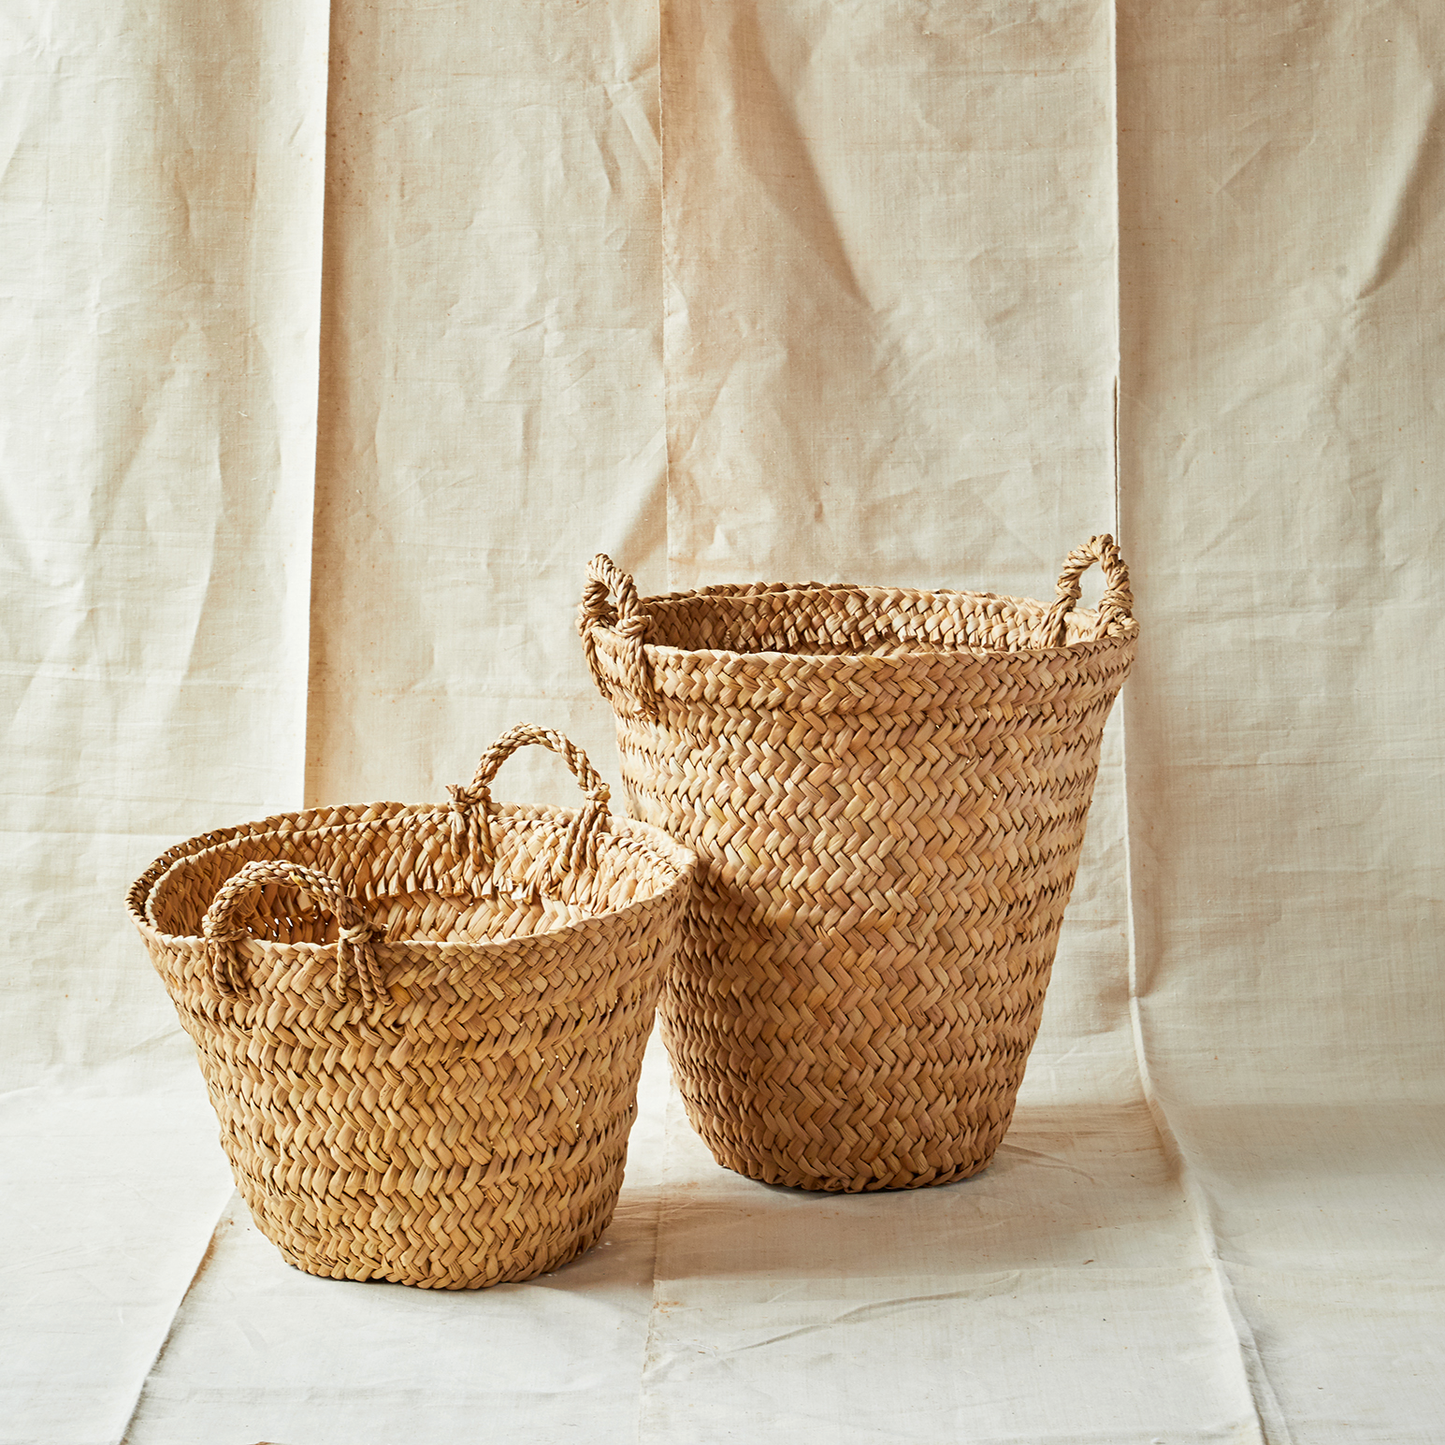 Intiearth handwoven totora basket small and medium